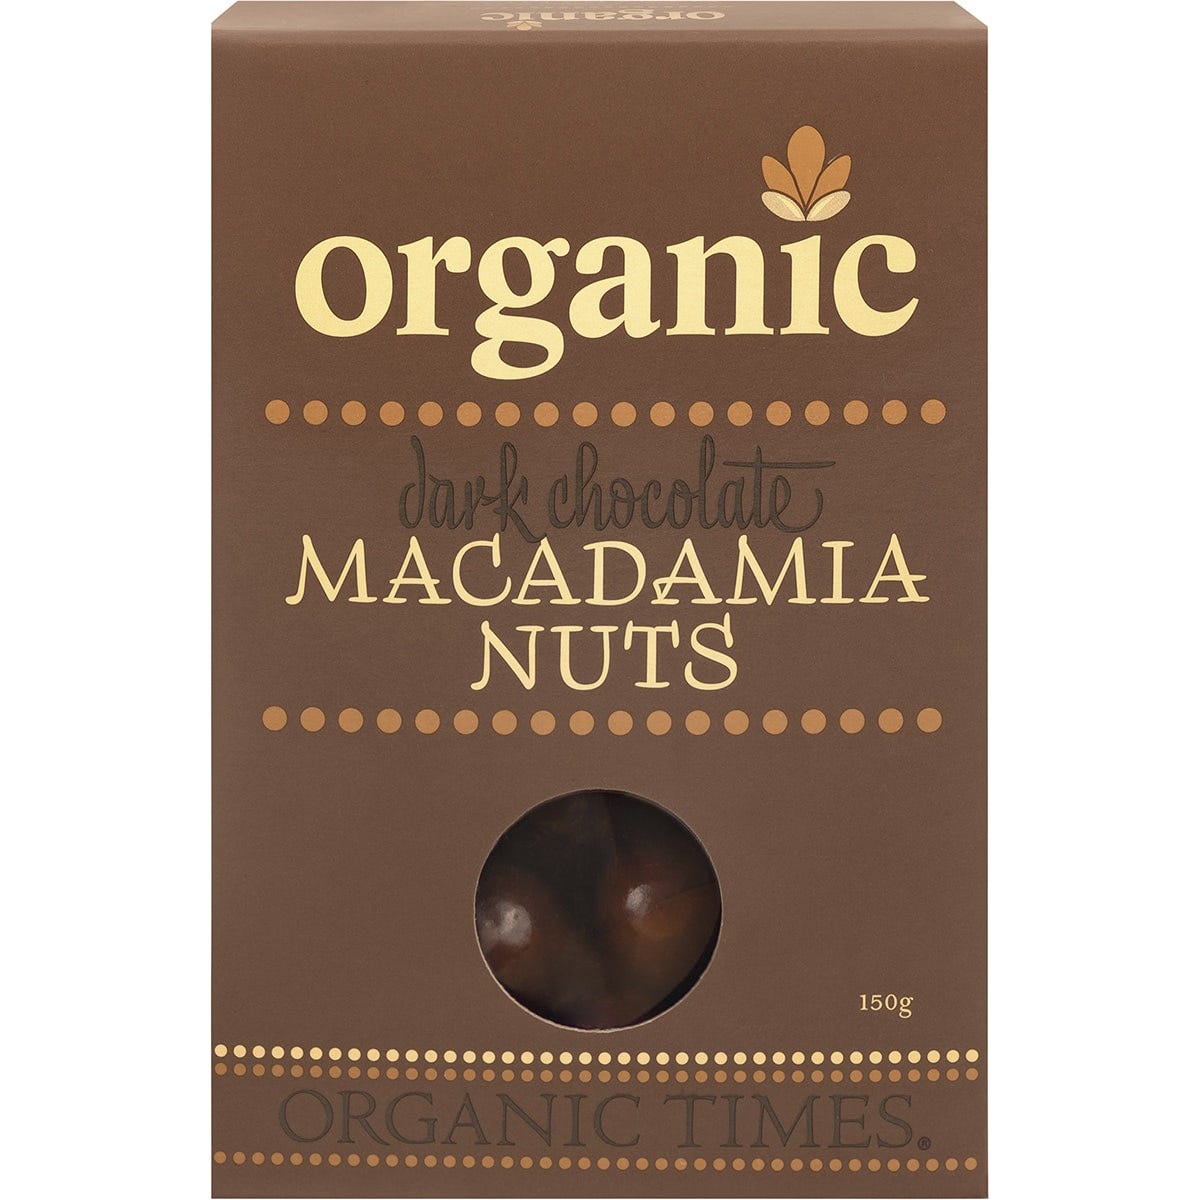 Organic Times Dark Chocolate Macadamia Nuts 150g - Dr Earth - Chocolate & Carob